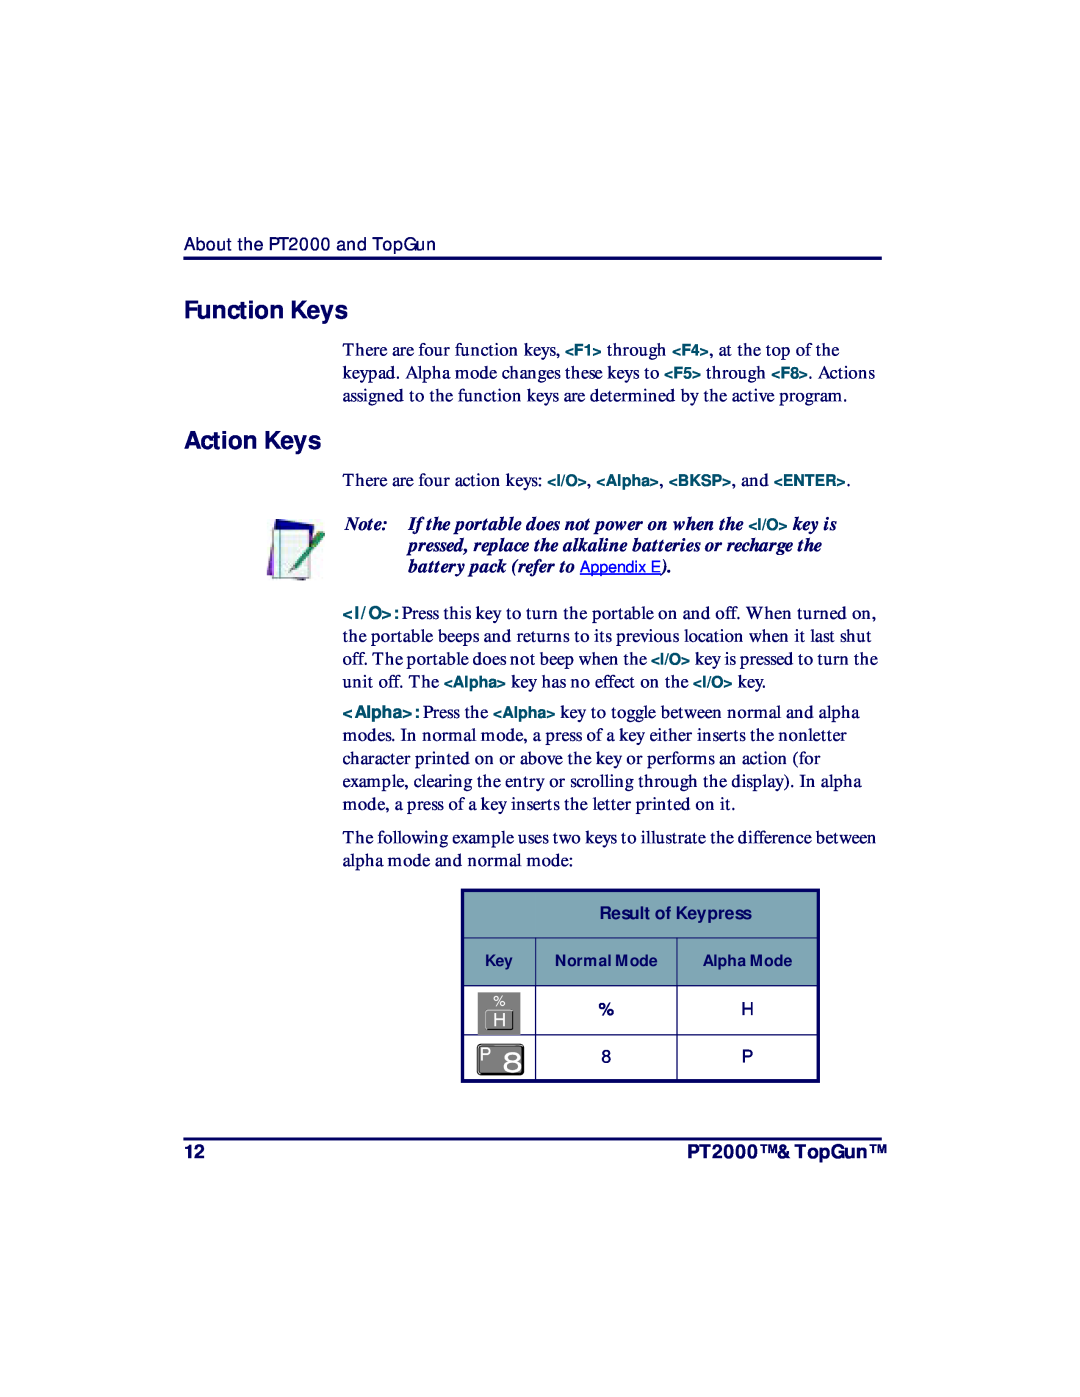 PSC TopGun, PT2000 manual Function Keys, Action Keys 